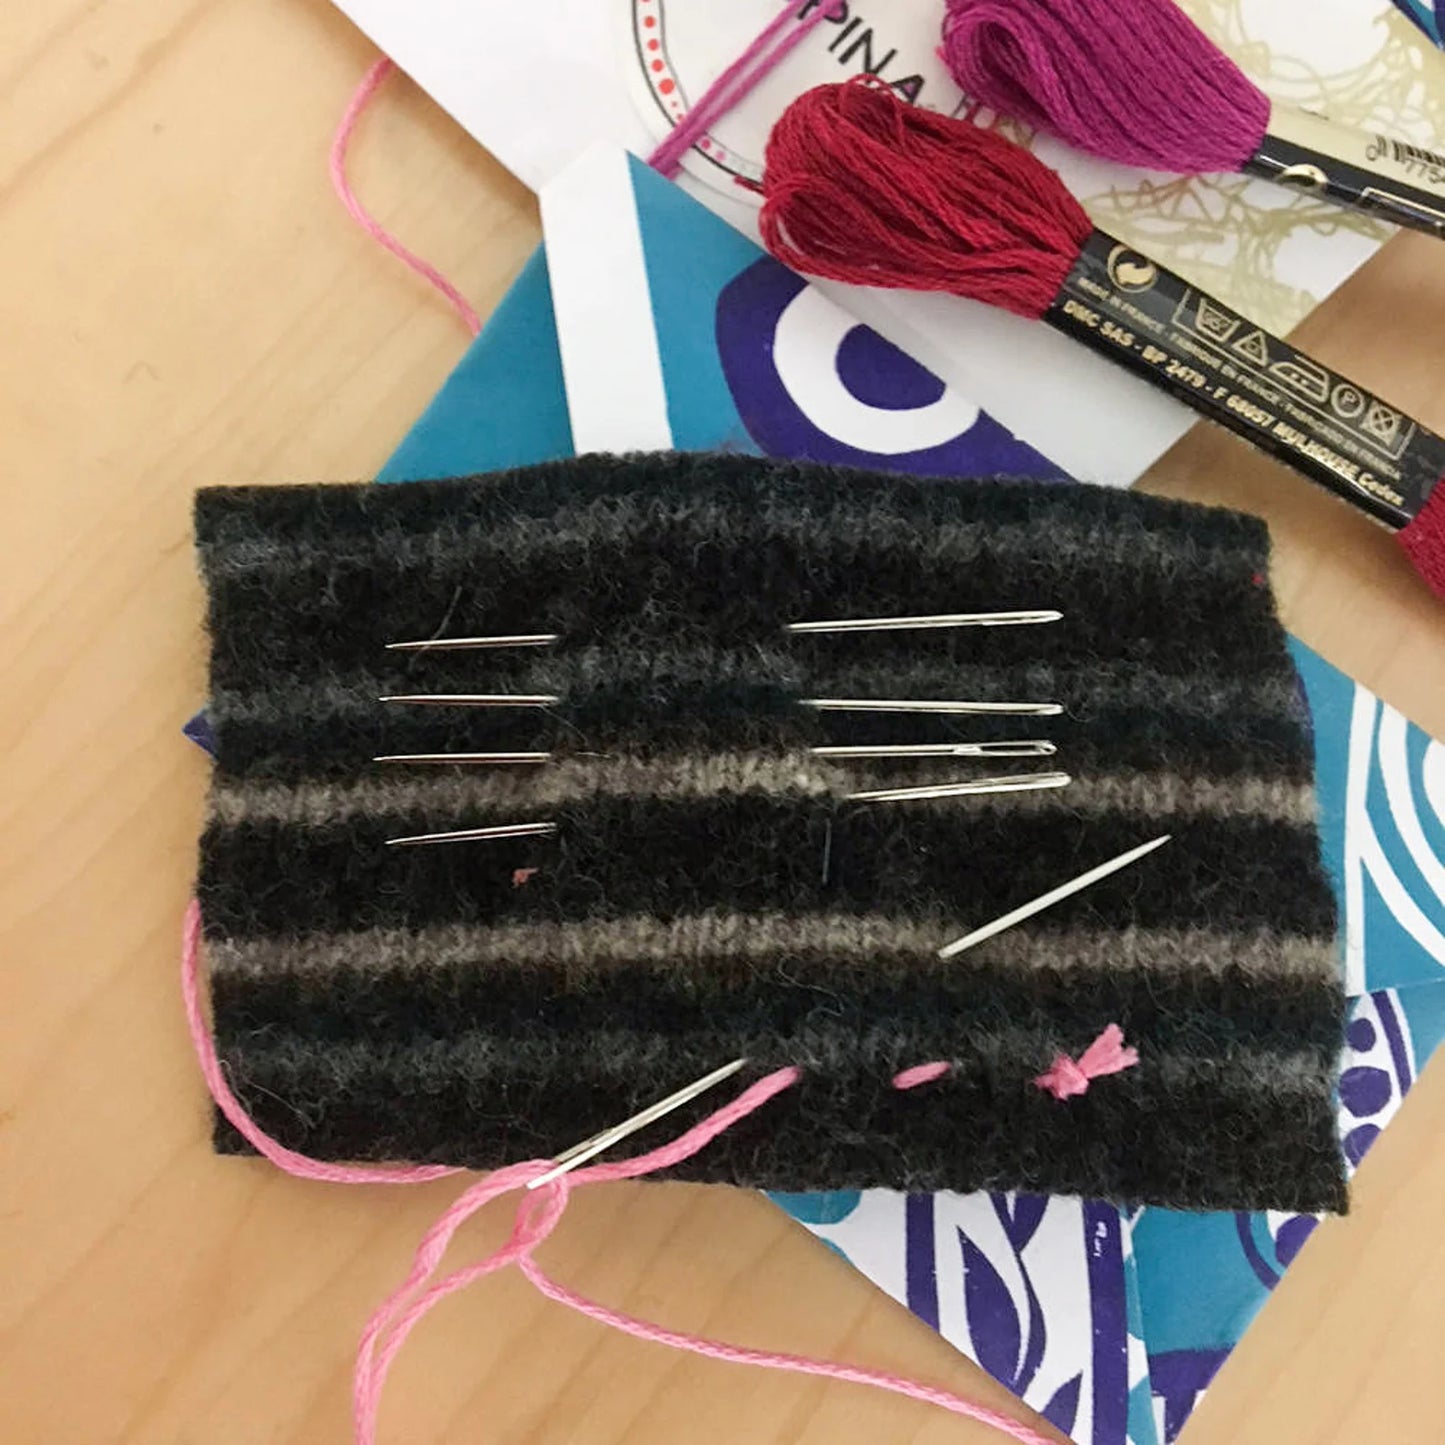 Hand Sewing Needles in Handmade Needlebook - Choose Size